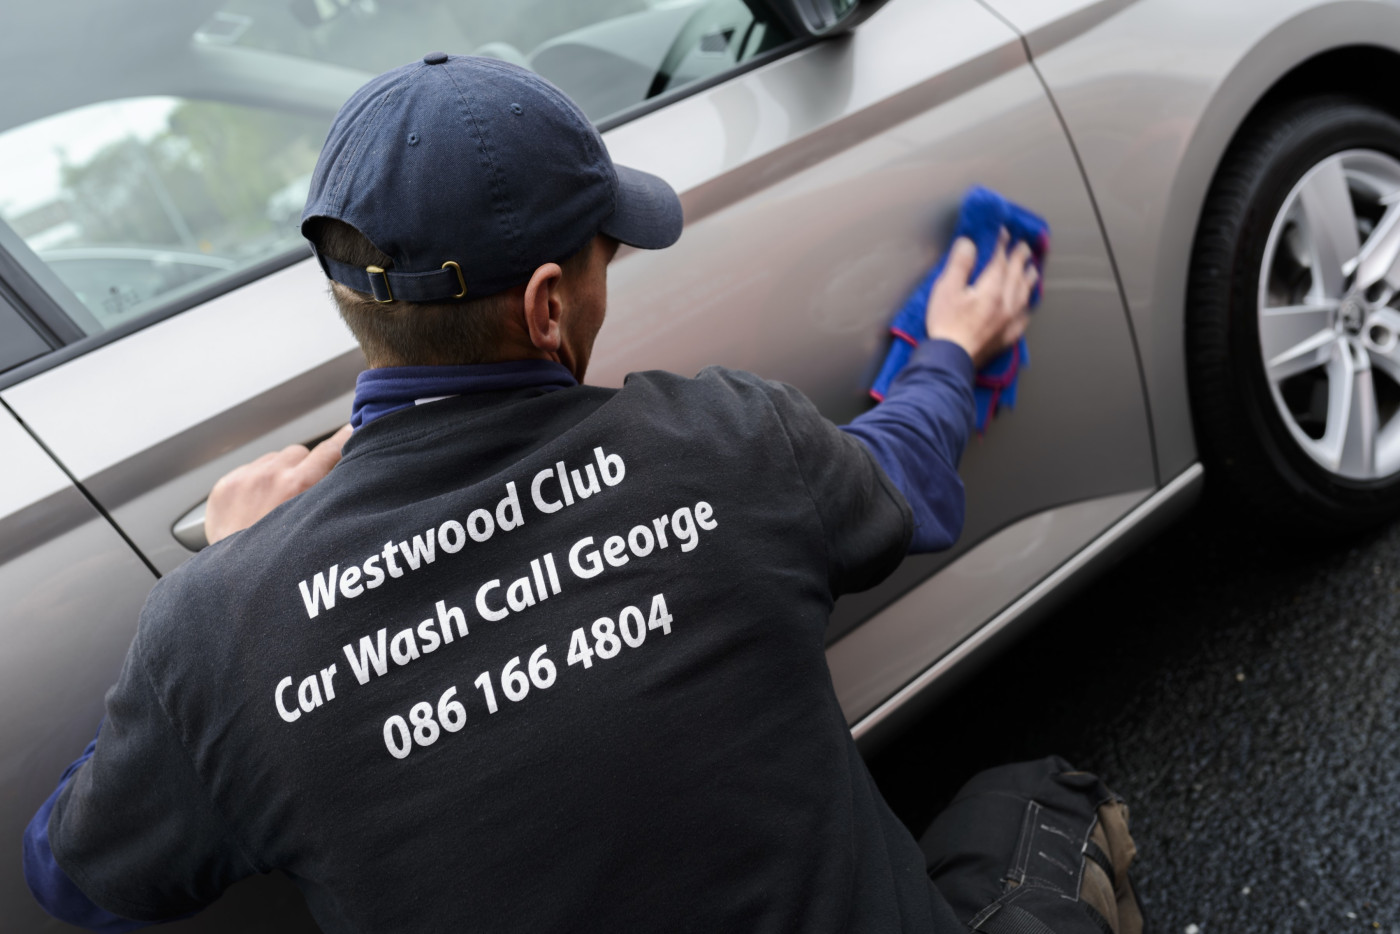 Car Wash Dublin at West Wood Club Leopardstown